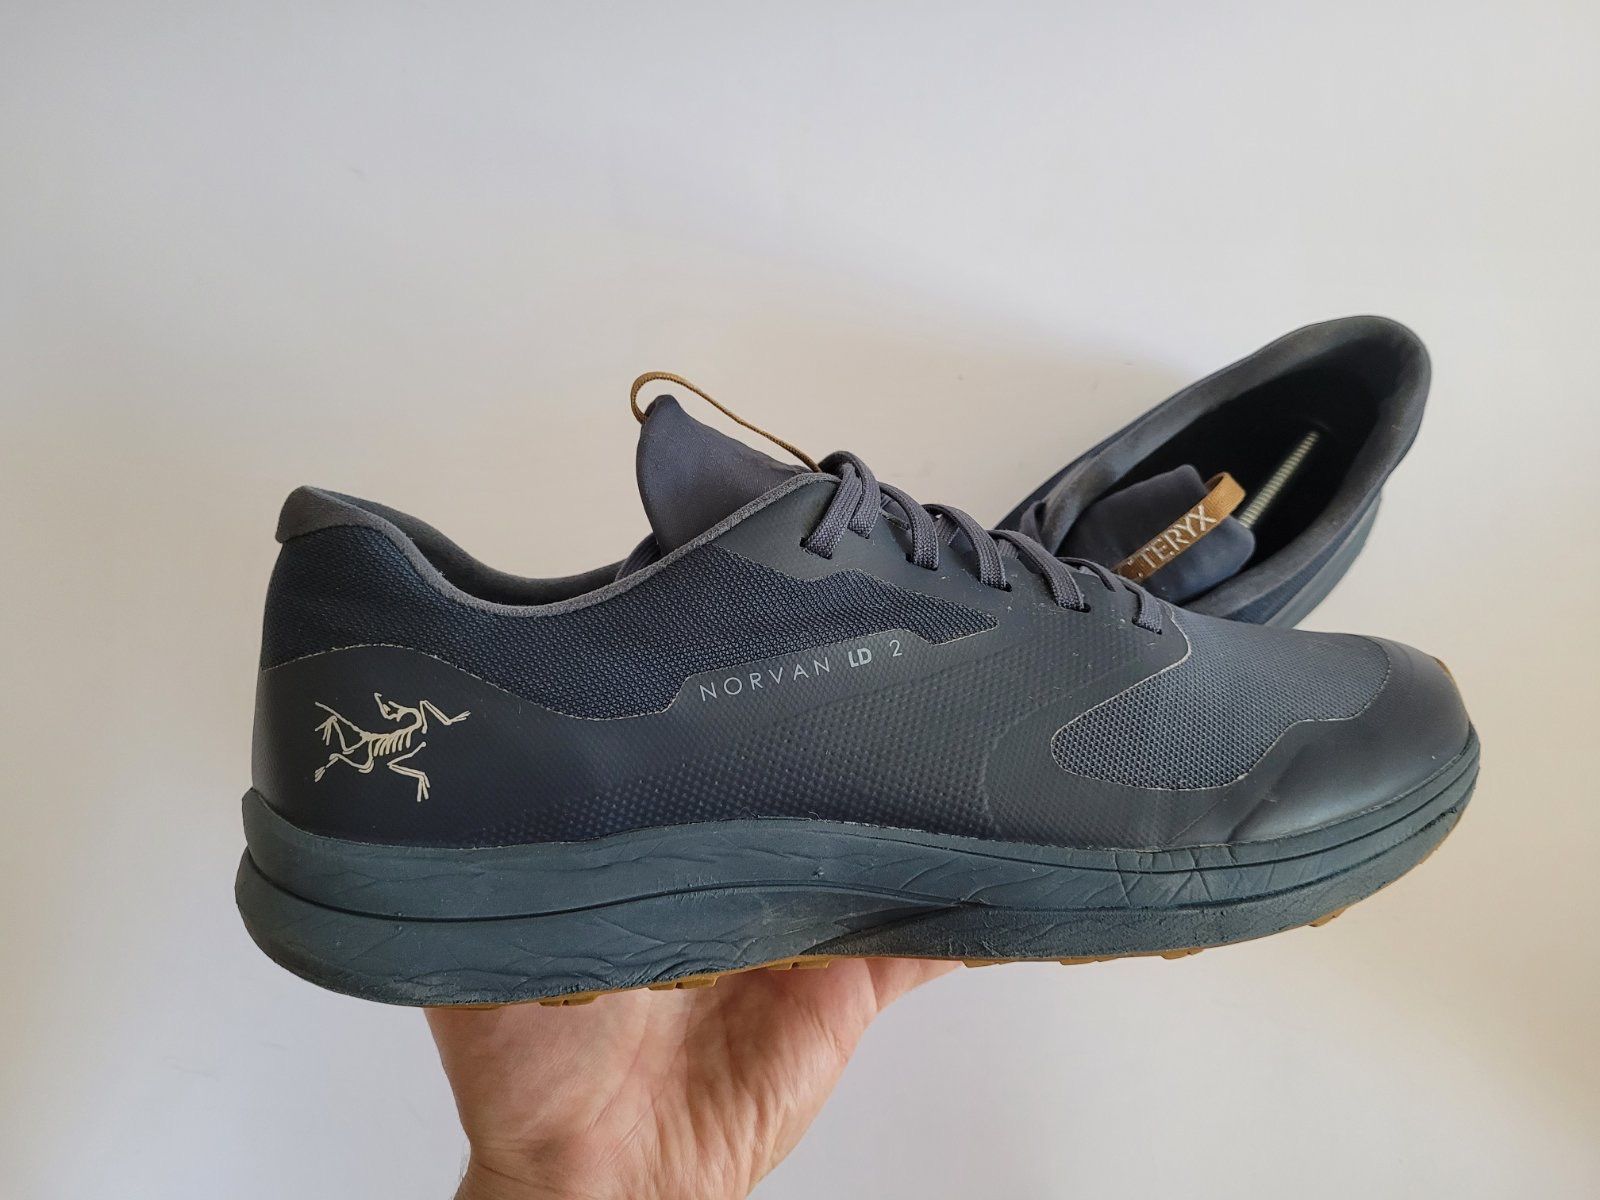 Arc'Teryx Arc'Teryx Norvan LD 2 gore tex black sneakers | Grailed